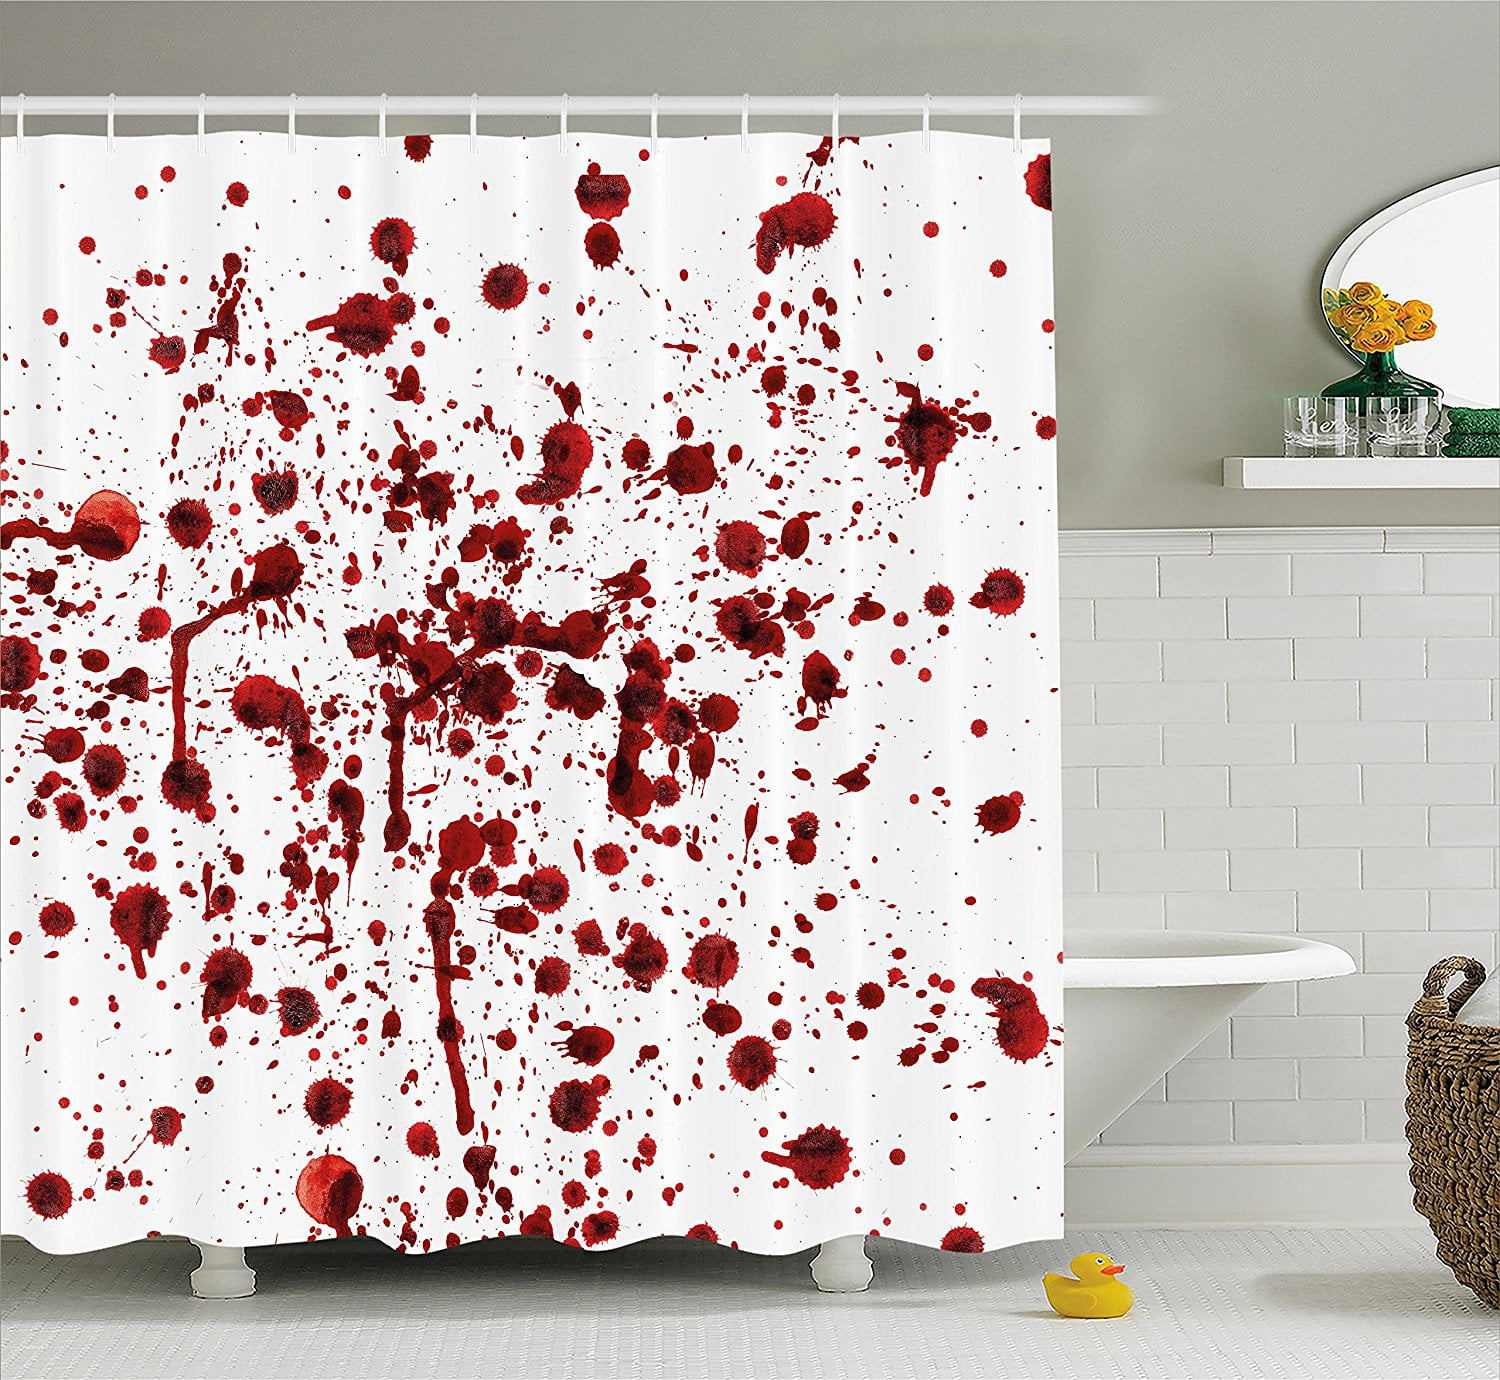 Details about   Halloween Horror Bloody Bathroom Shower Curtains Bathtub Waterproof Room Decor 